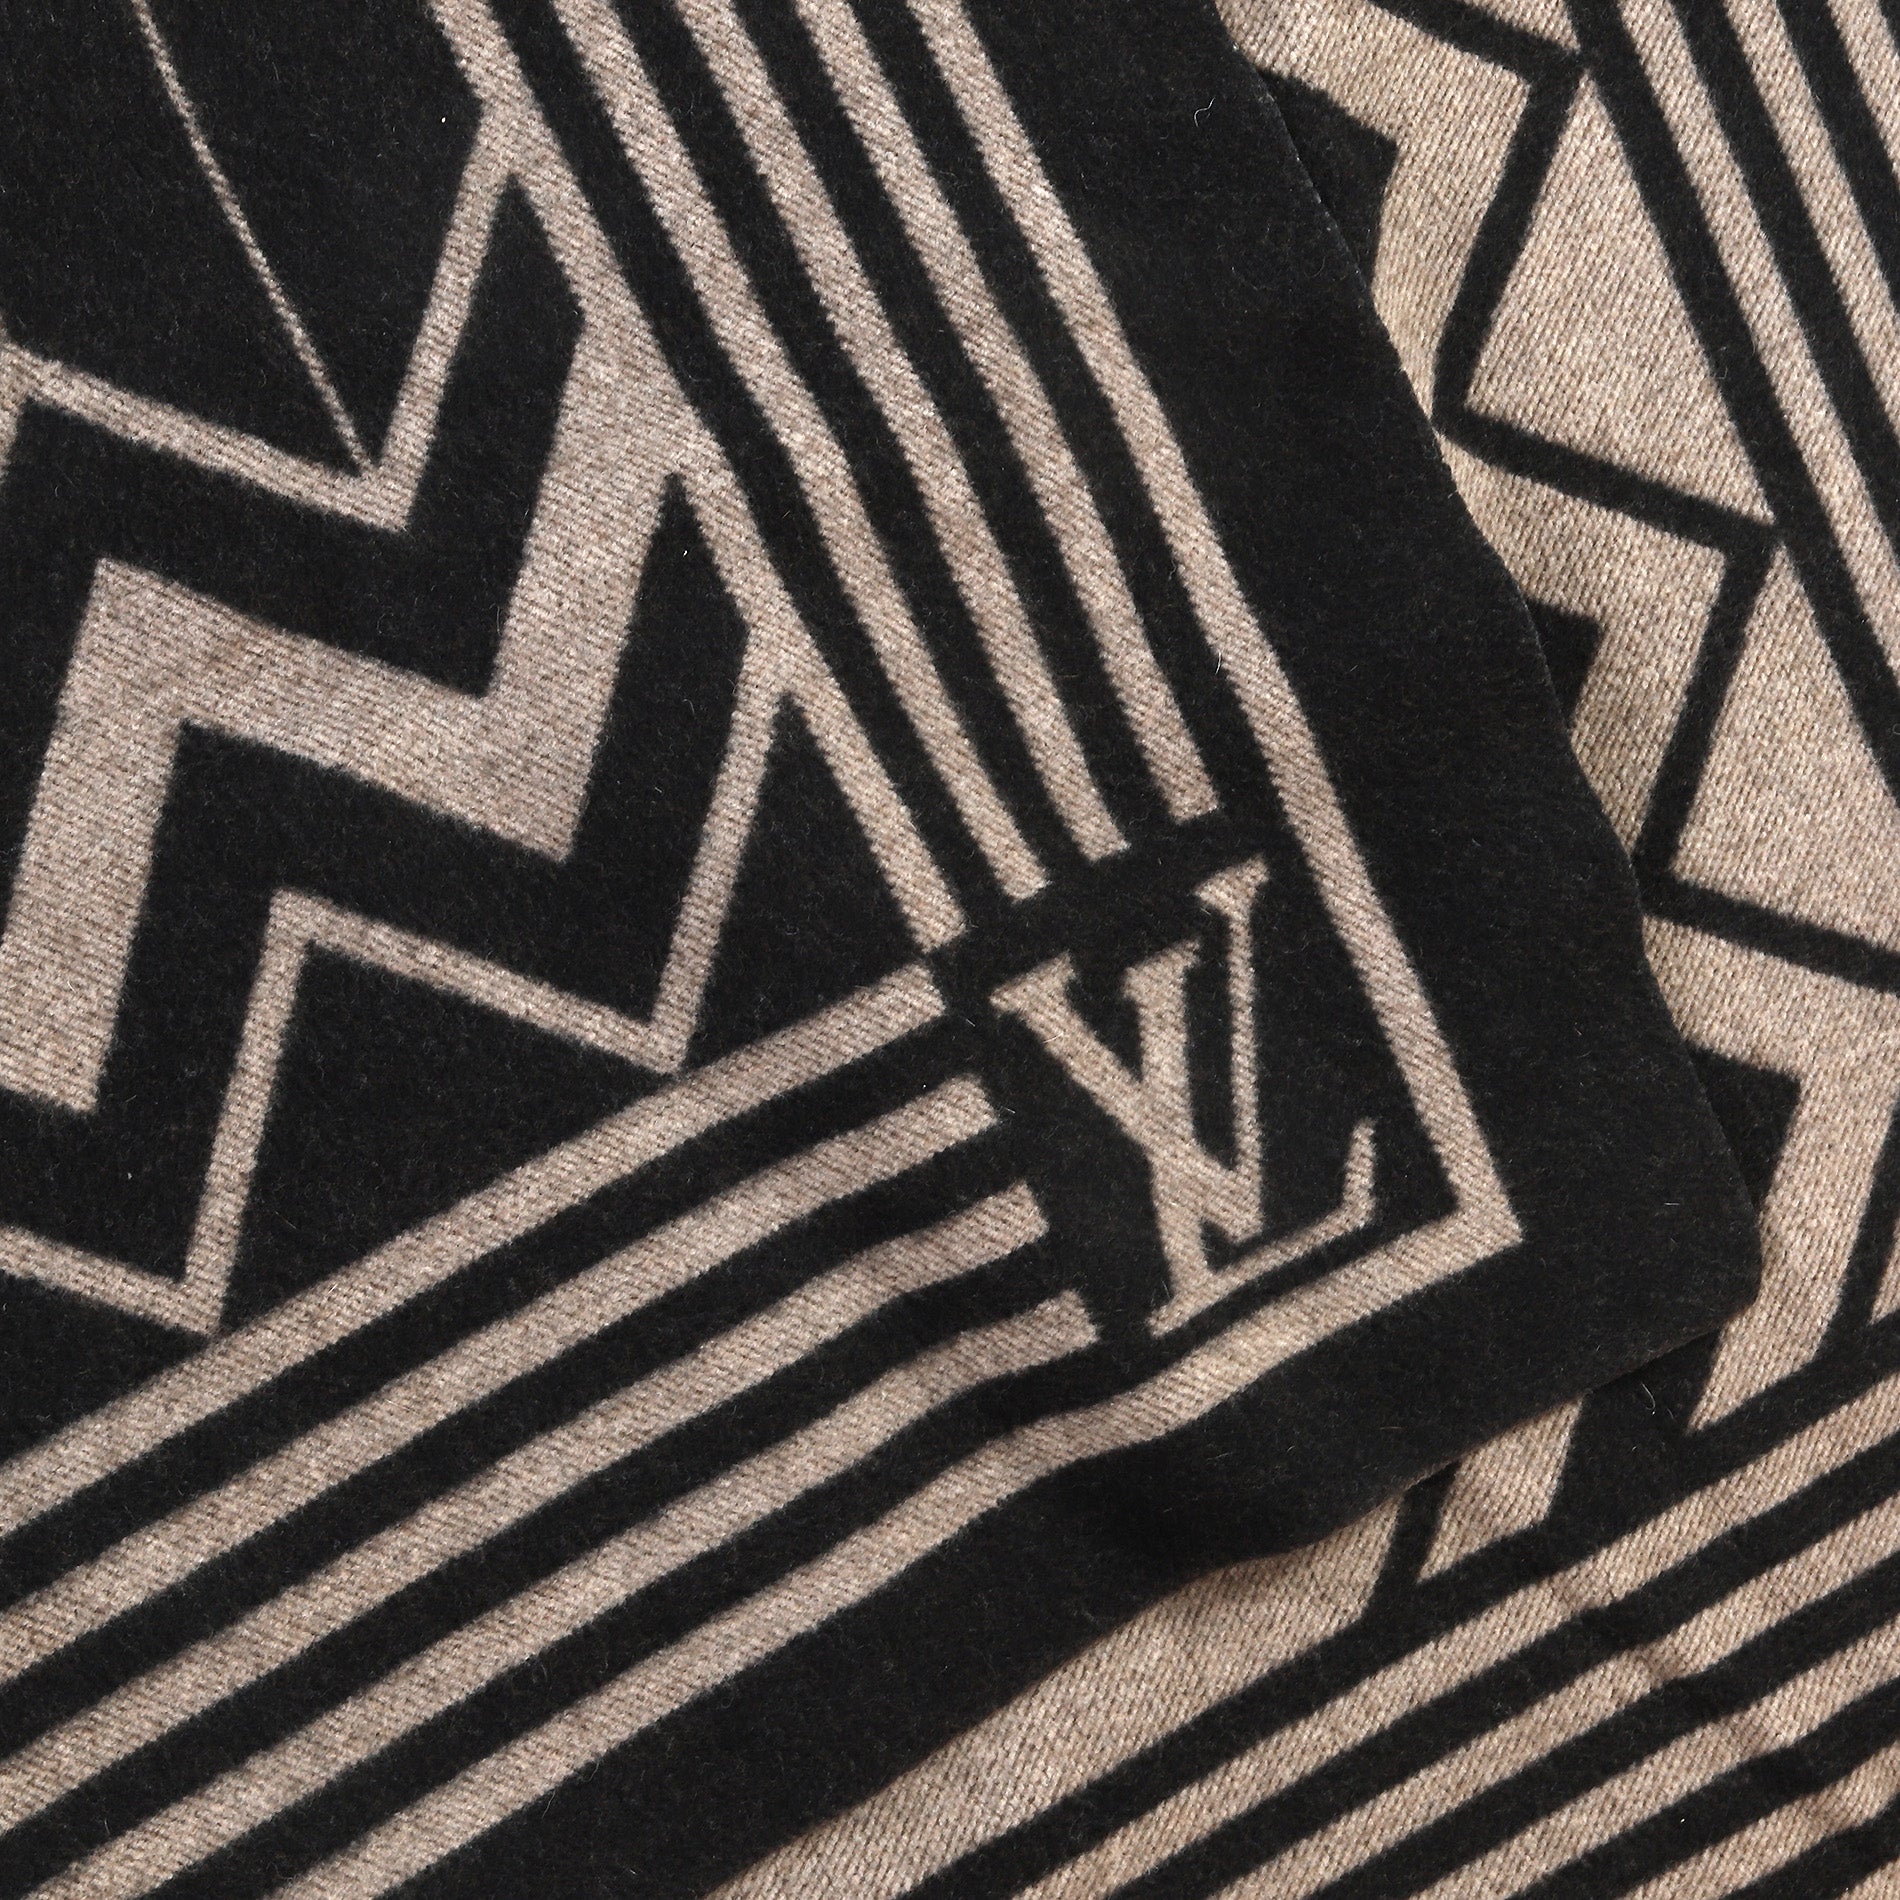 Louis Vuitton FW2015 Karakoram Wool Blanket/Scarf